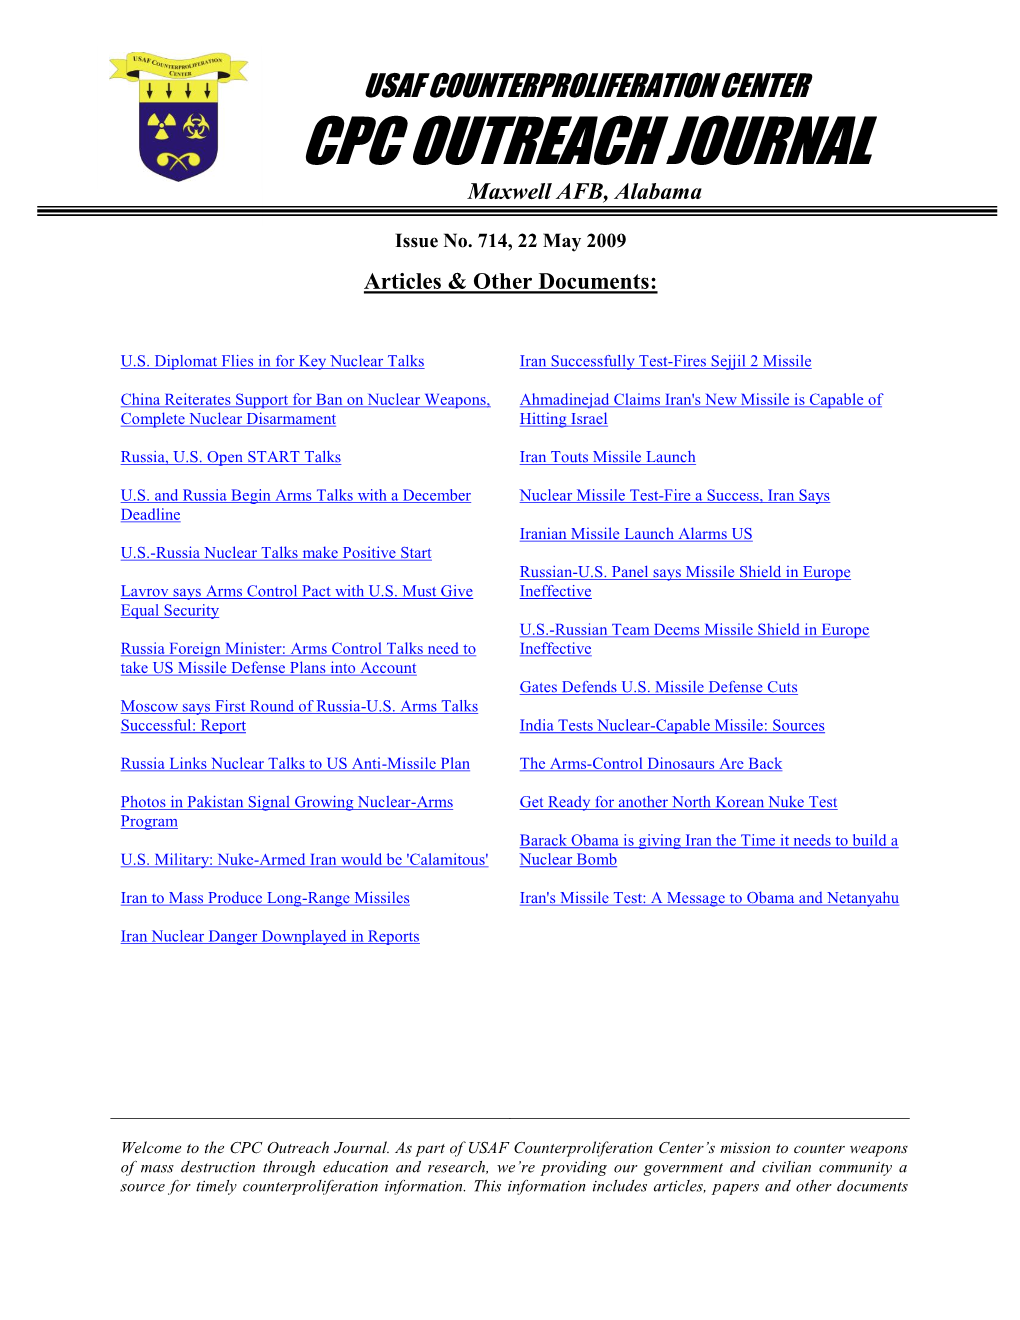 USAF Counterproliferation Center CPC Outreach Journal #714